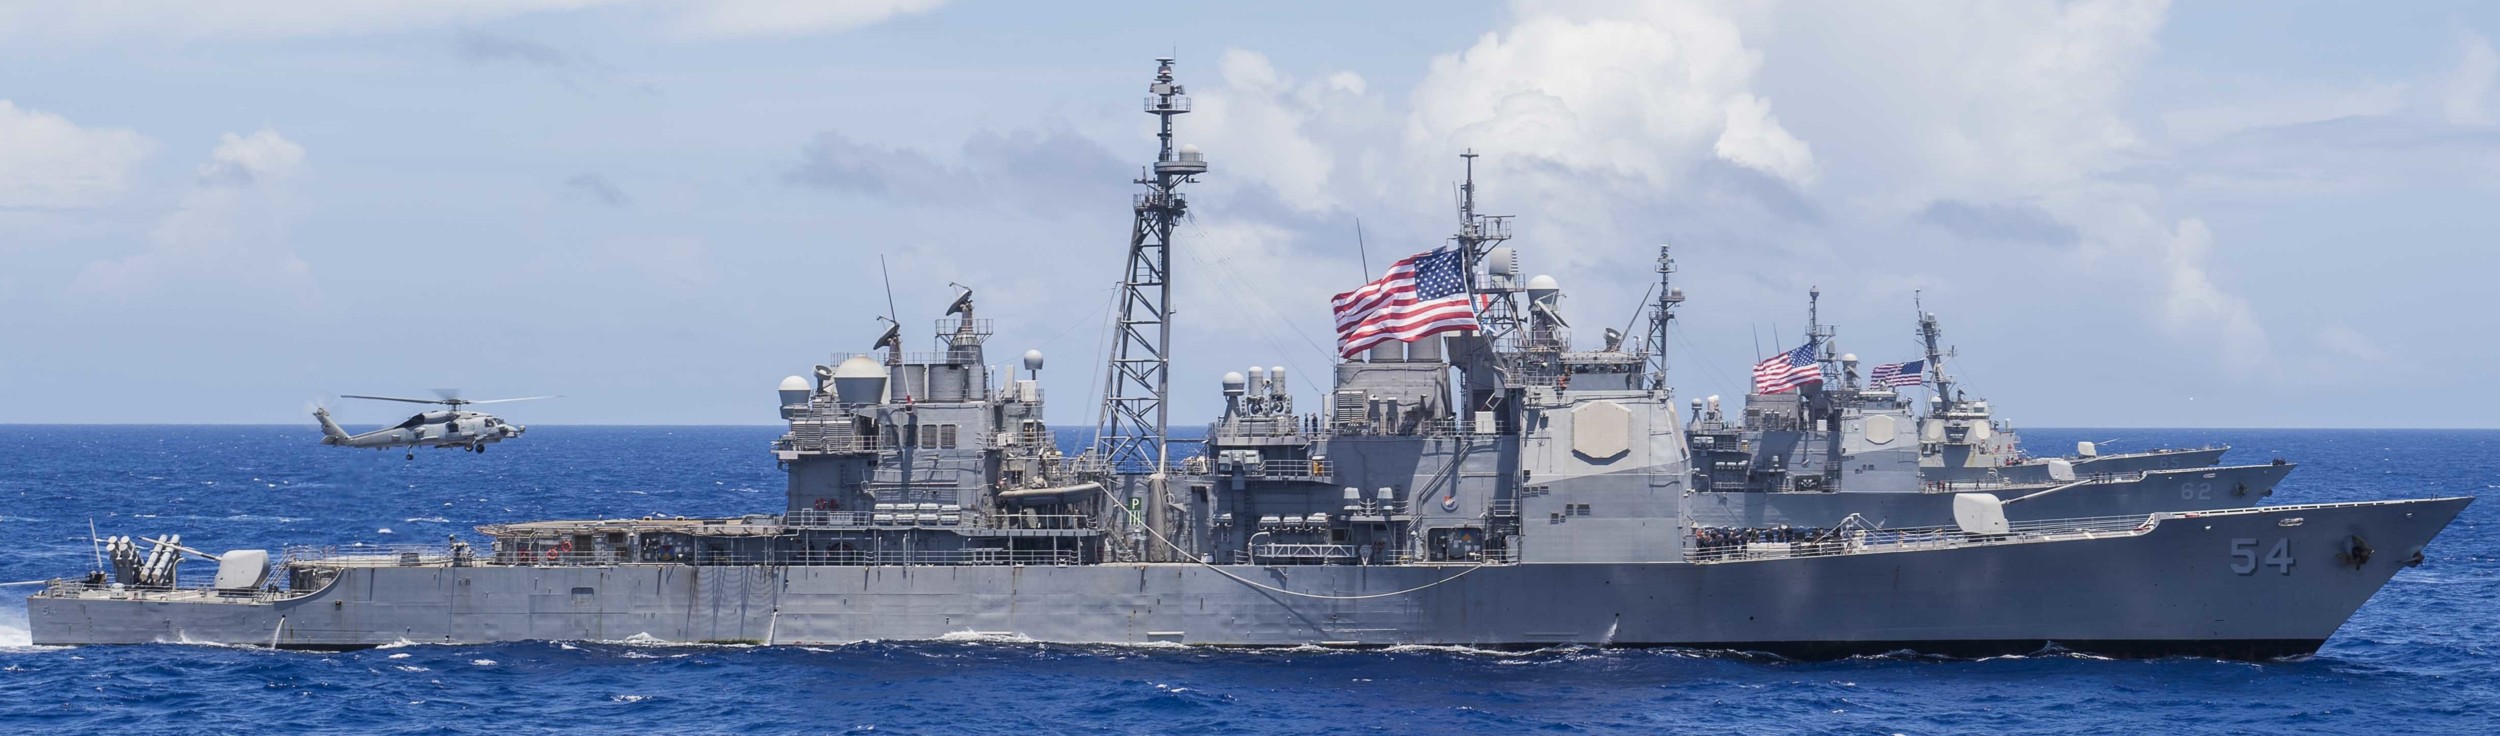 cg-54 uss antietam ticonderoga class guided missile cruiser aegis us navy valiant shield 2018 81